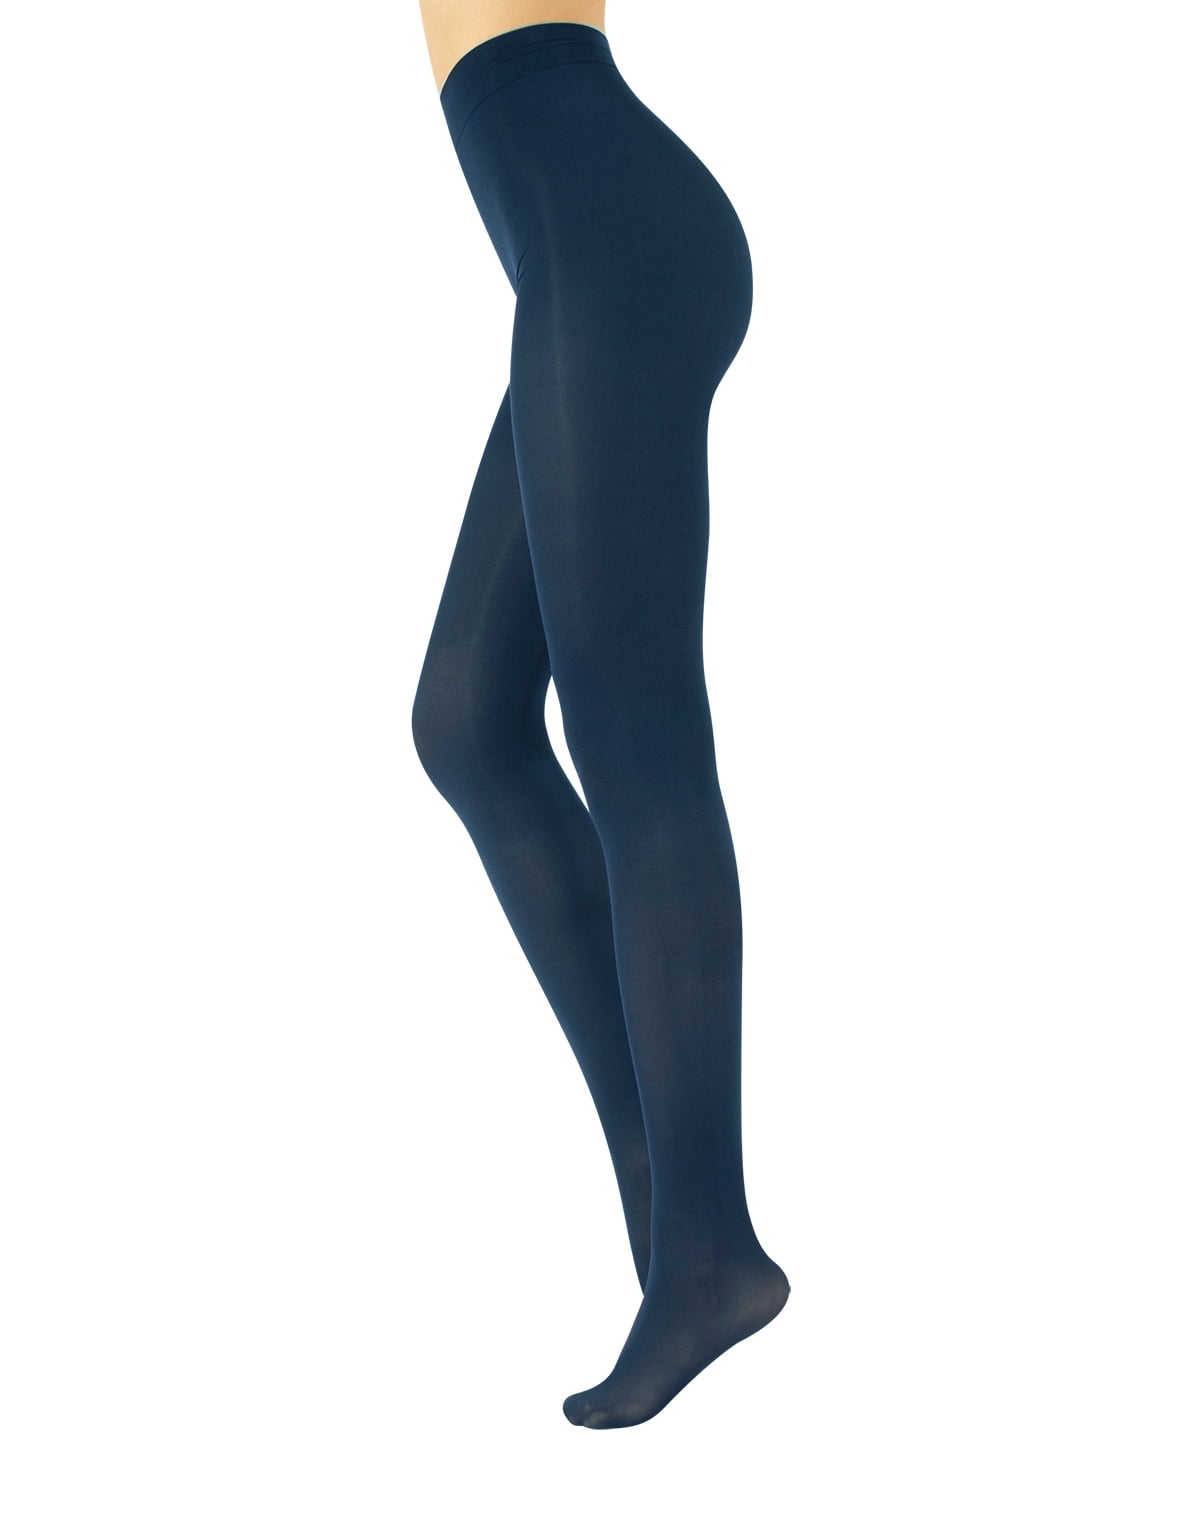 CALZITALY Opaque Colour tights, Thick tights, Microfiber 3D Pantyhose, 80  DEN | S, M, L, XL, XXL, 3XL, 4XL | Italian Hosiery